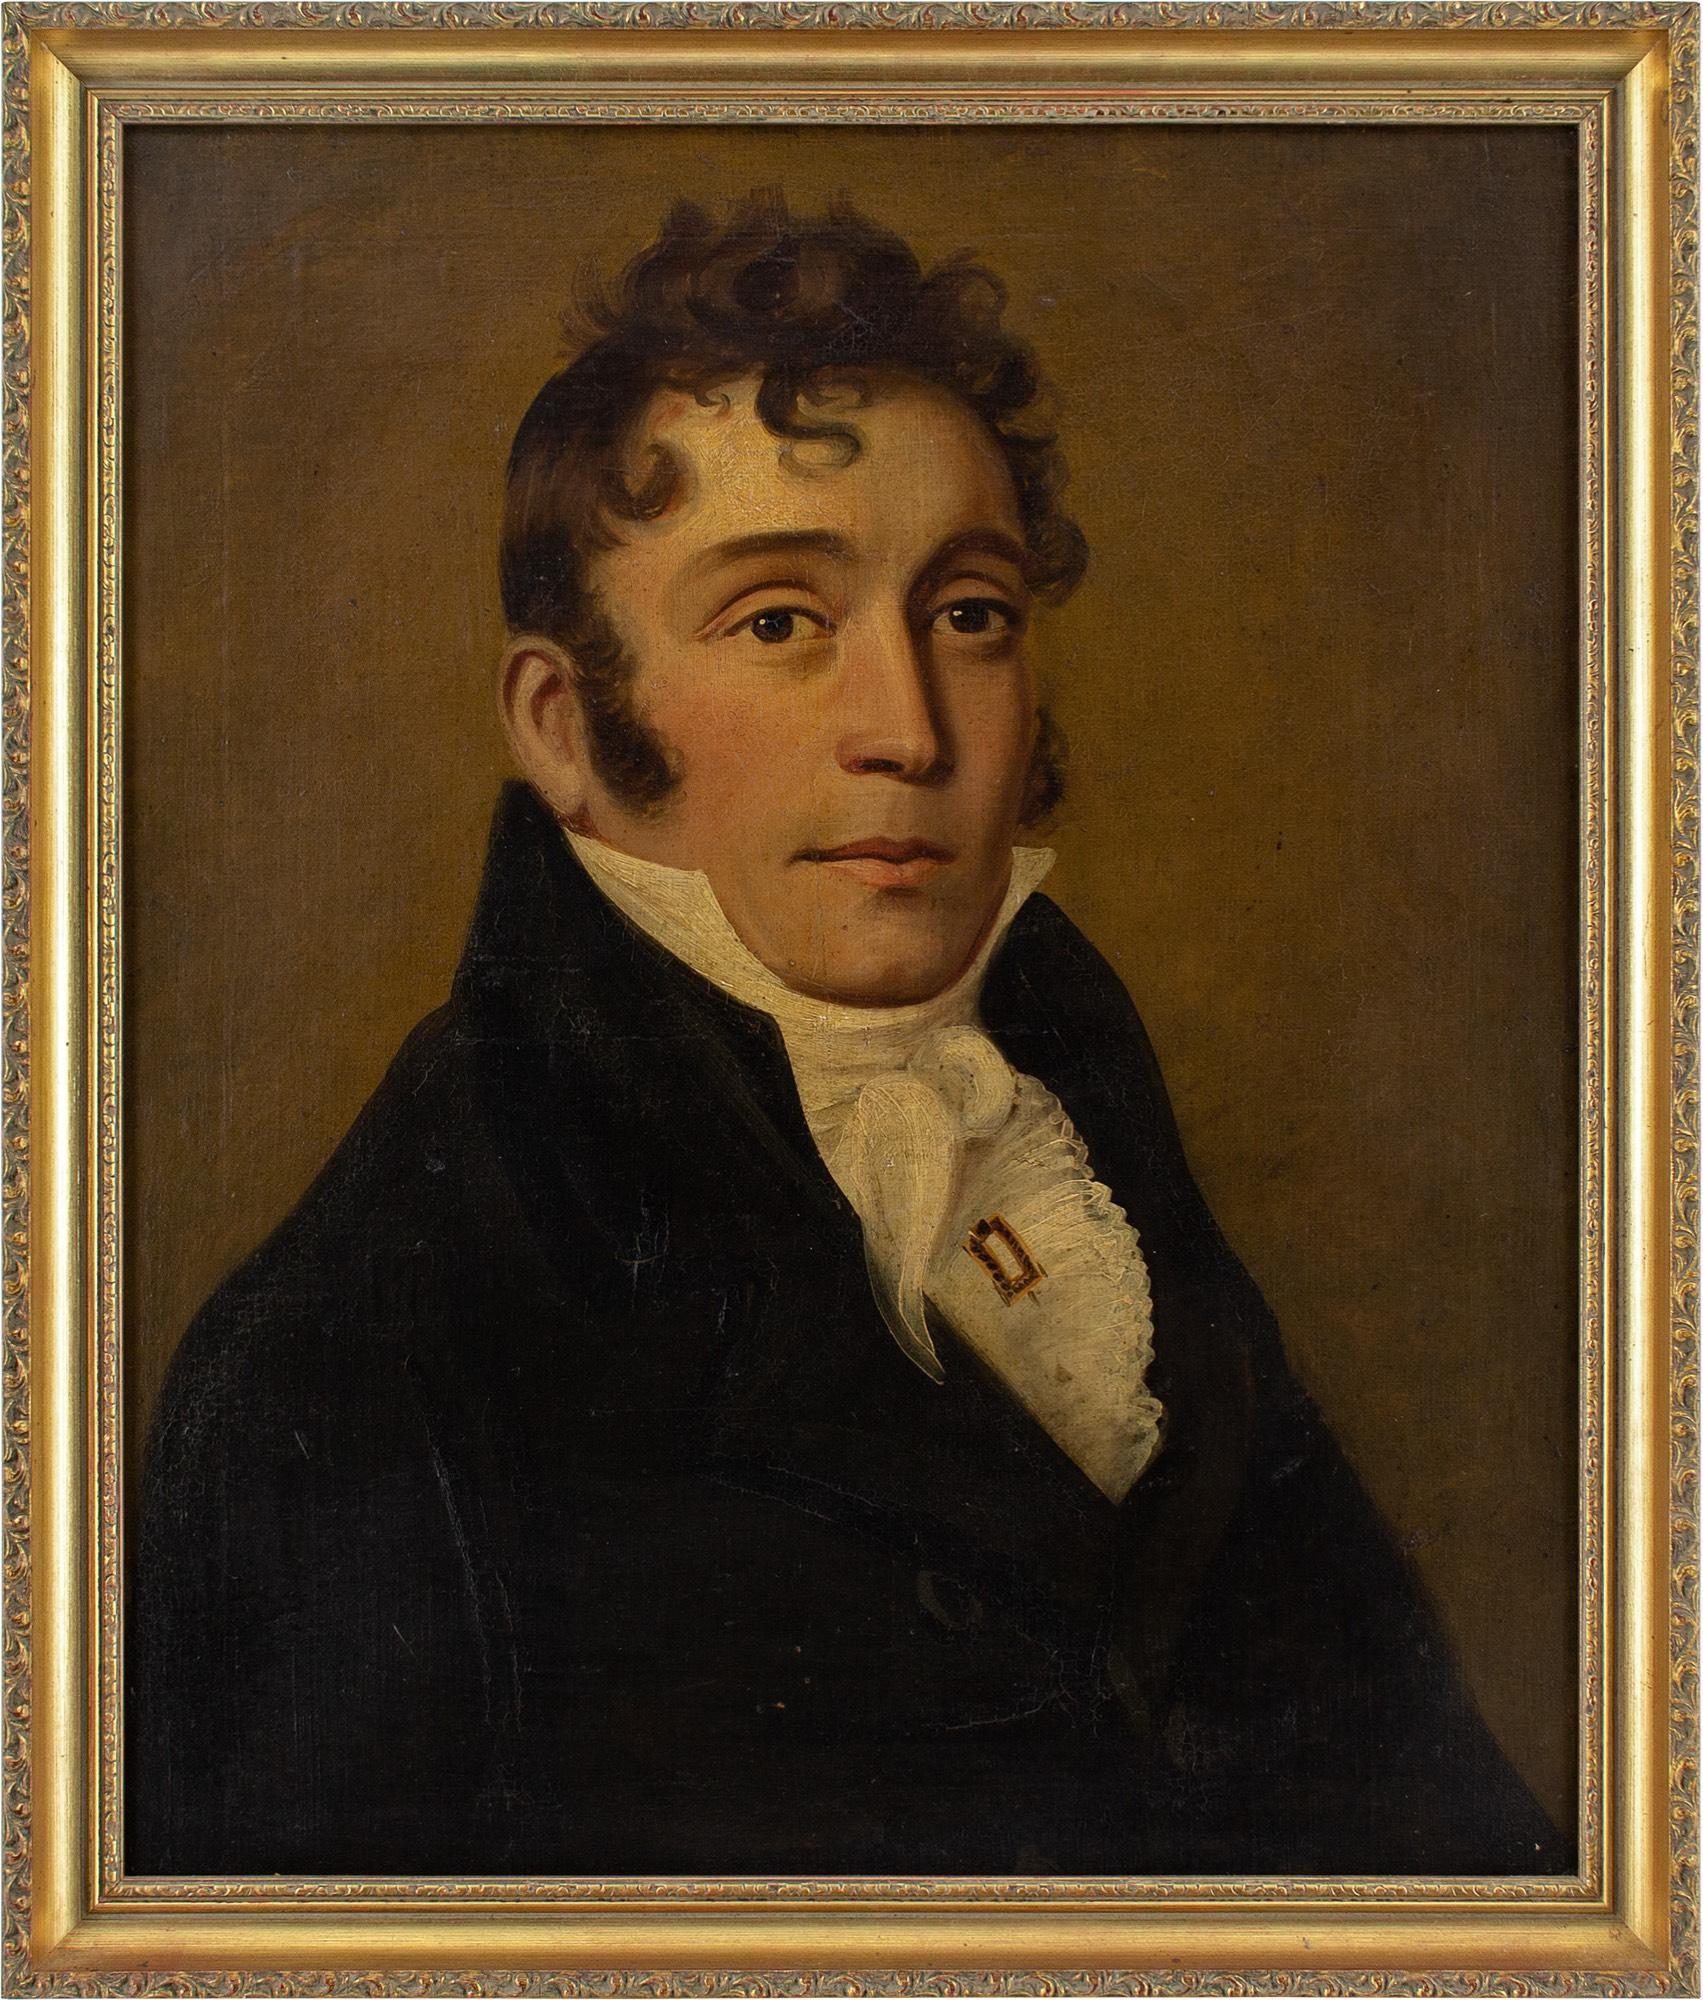 Unknown Portrait Painting - Early 19th-Century British School, Portrait Of A Regency Gentleman